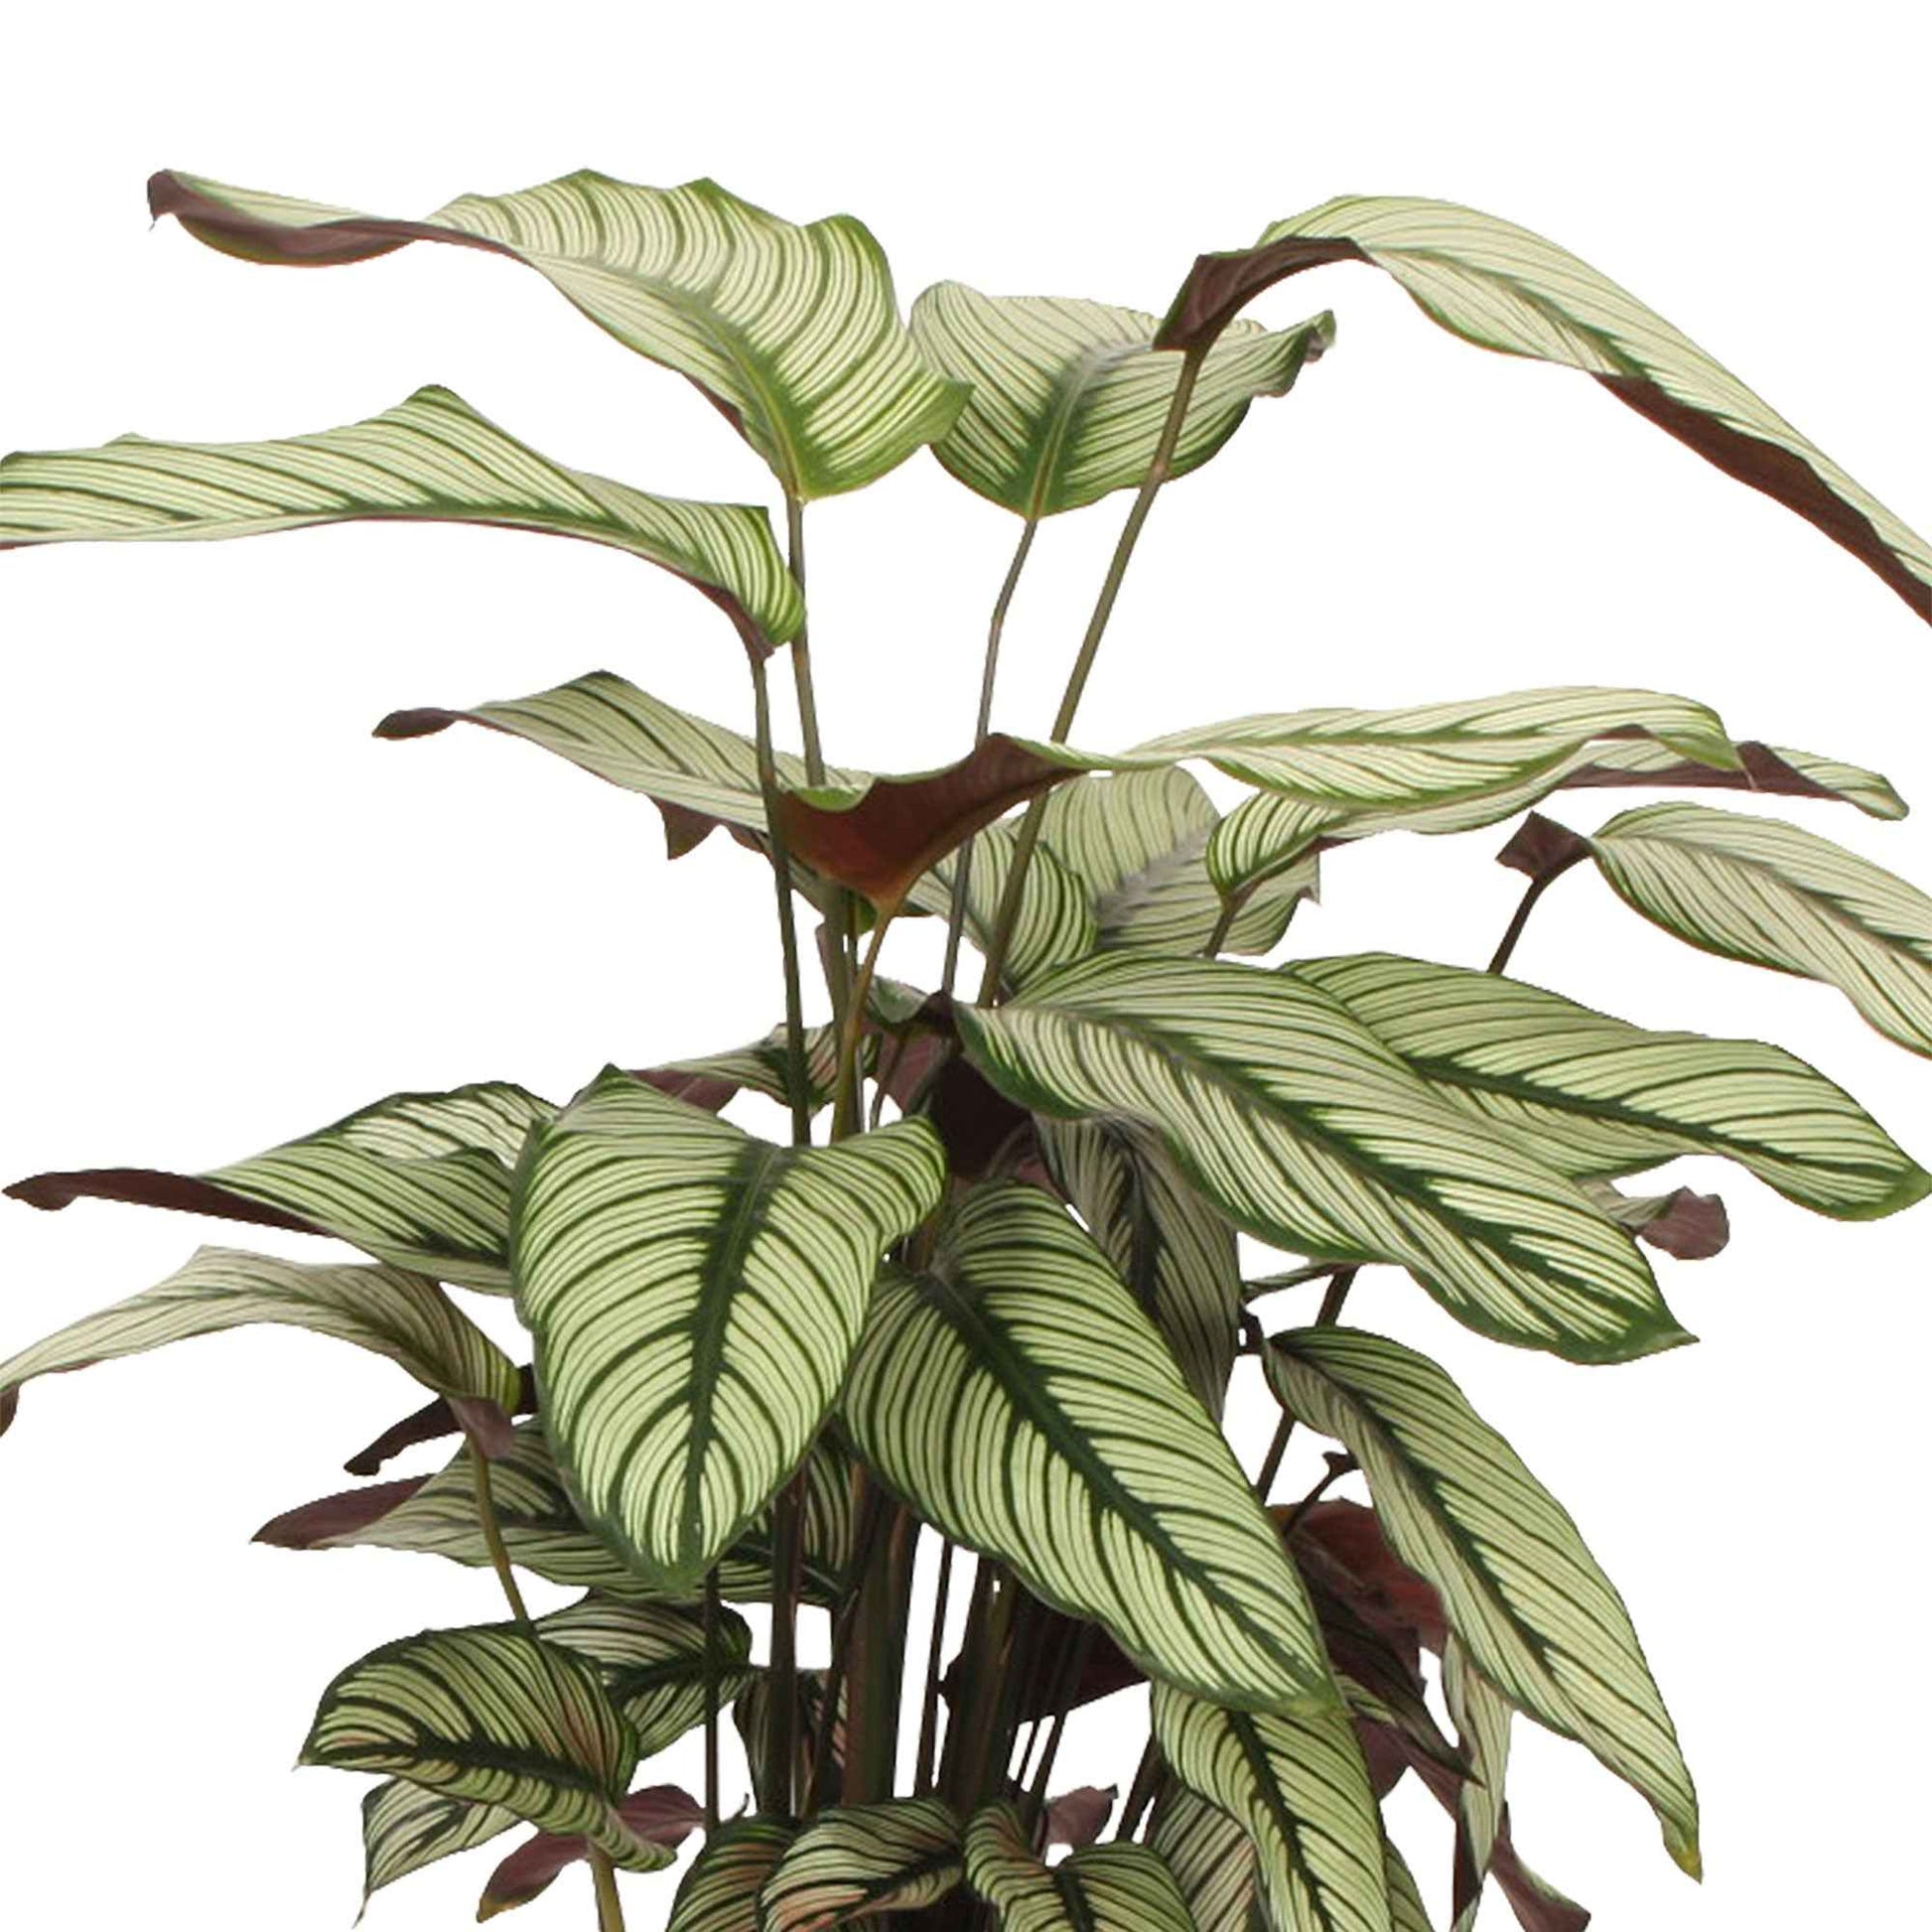 Schaduwplant Calathea White Star incl. rieten mand naturel - Bloempotten